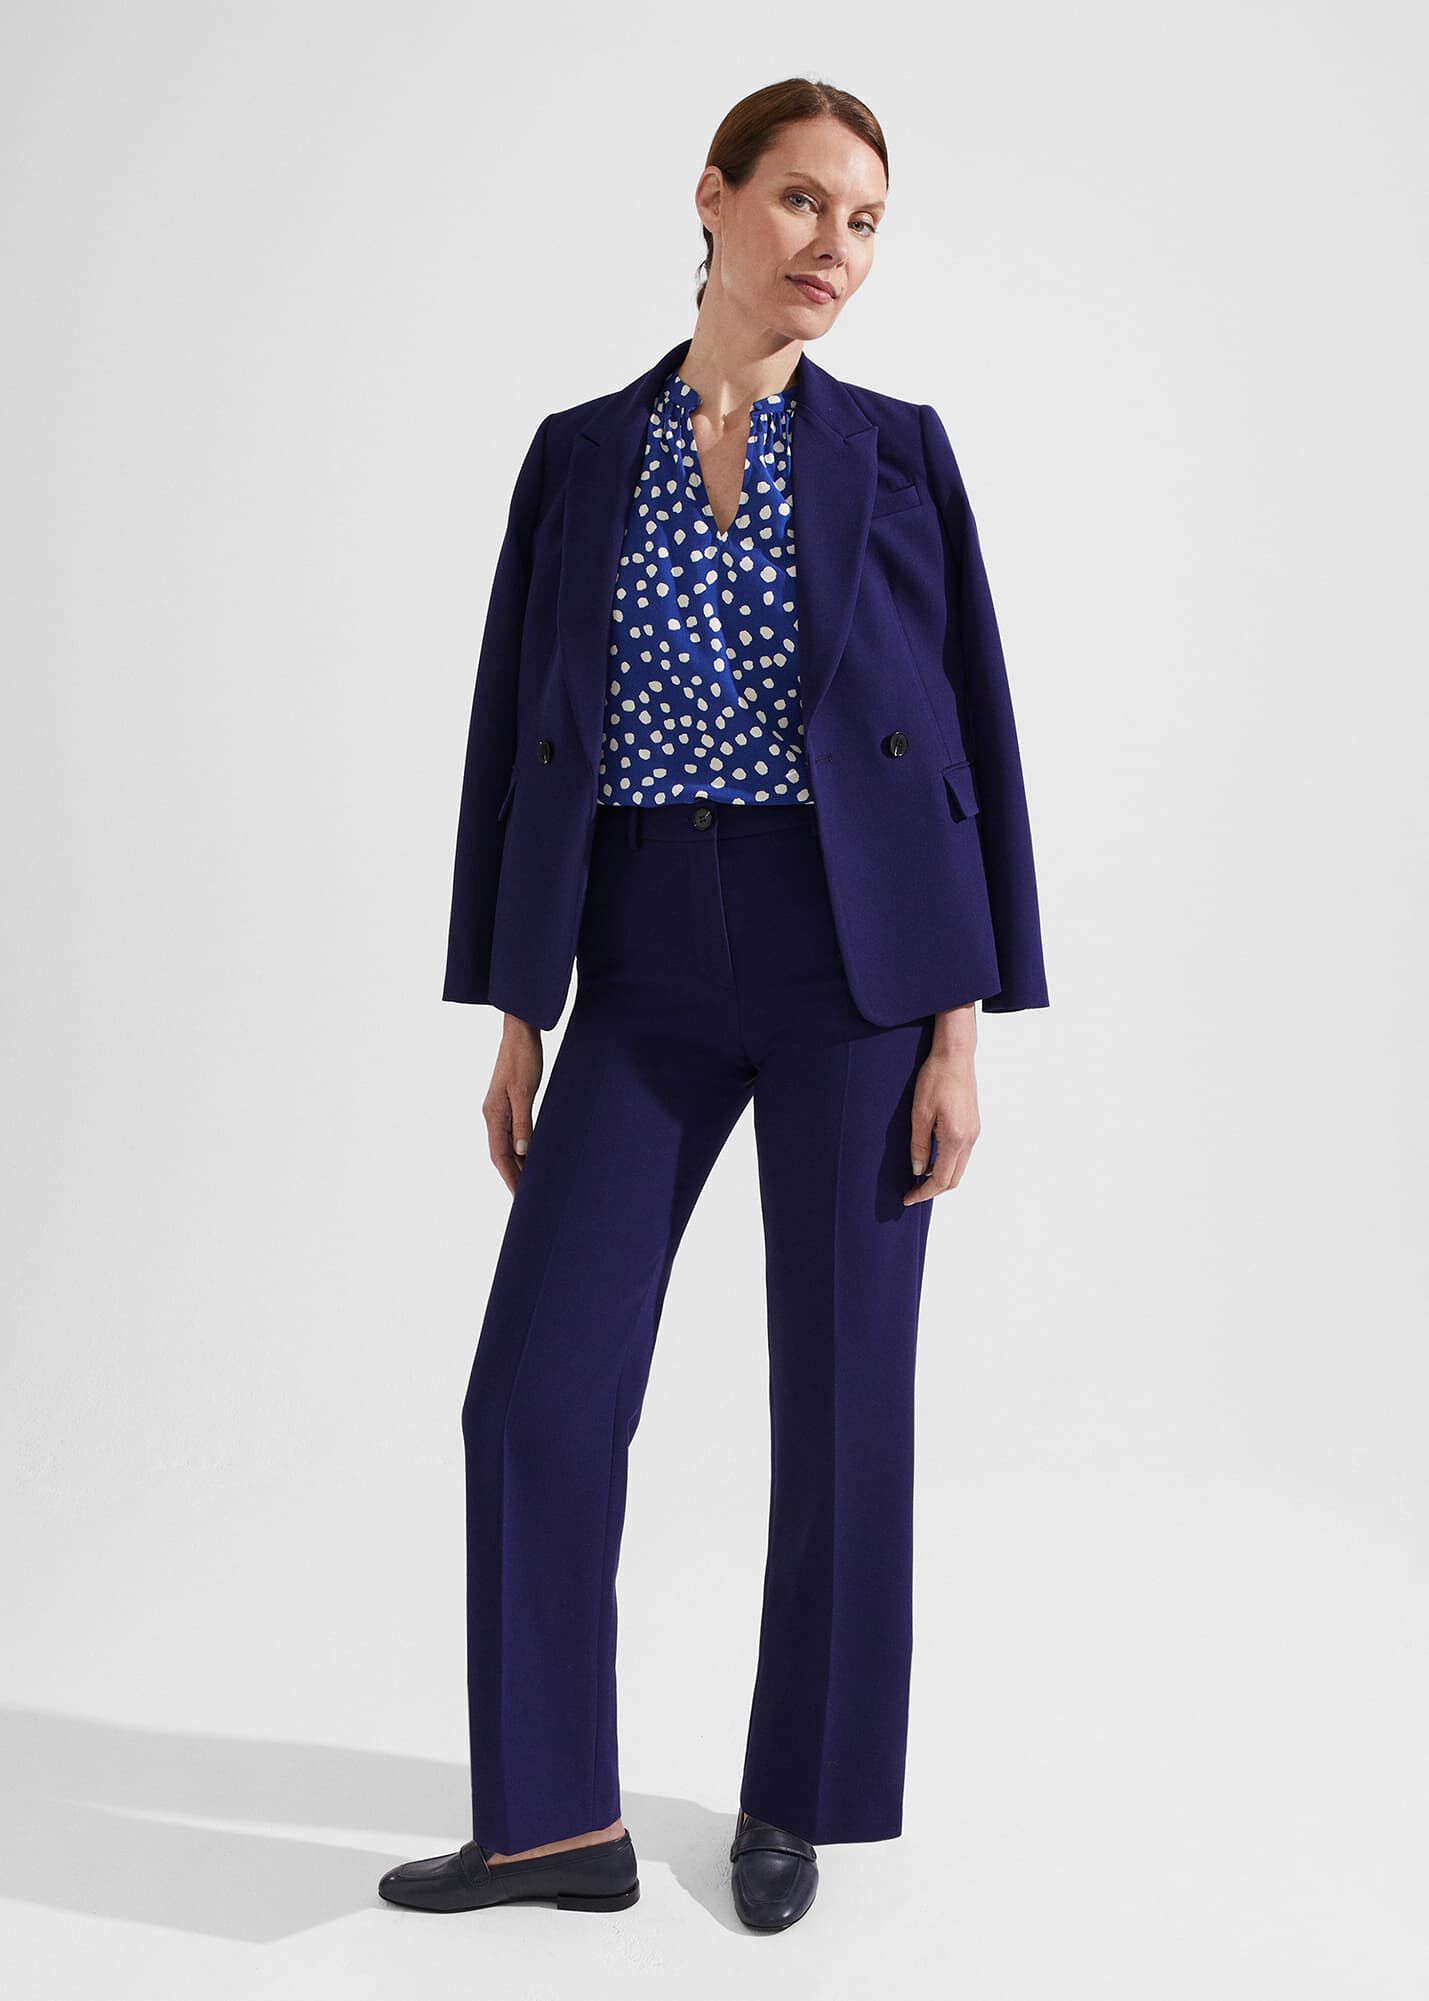 Womens Suit 2piece Navy Blue Striped Business Slim Fit Jacket Office Work  Wear Blazer  Trousers Pants For Female Спортивный К  Pant Suits   AliExpress